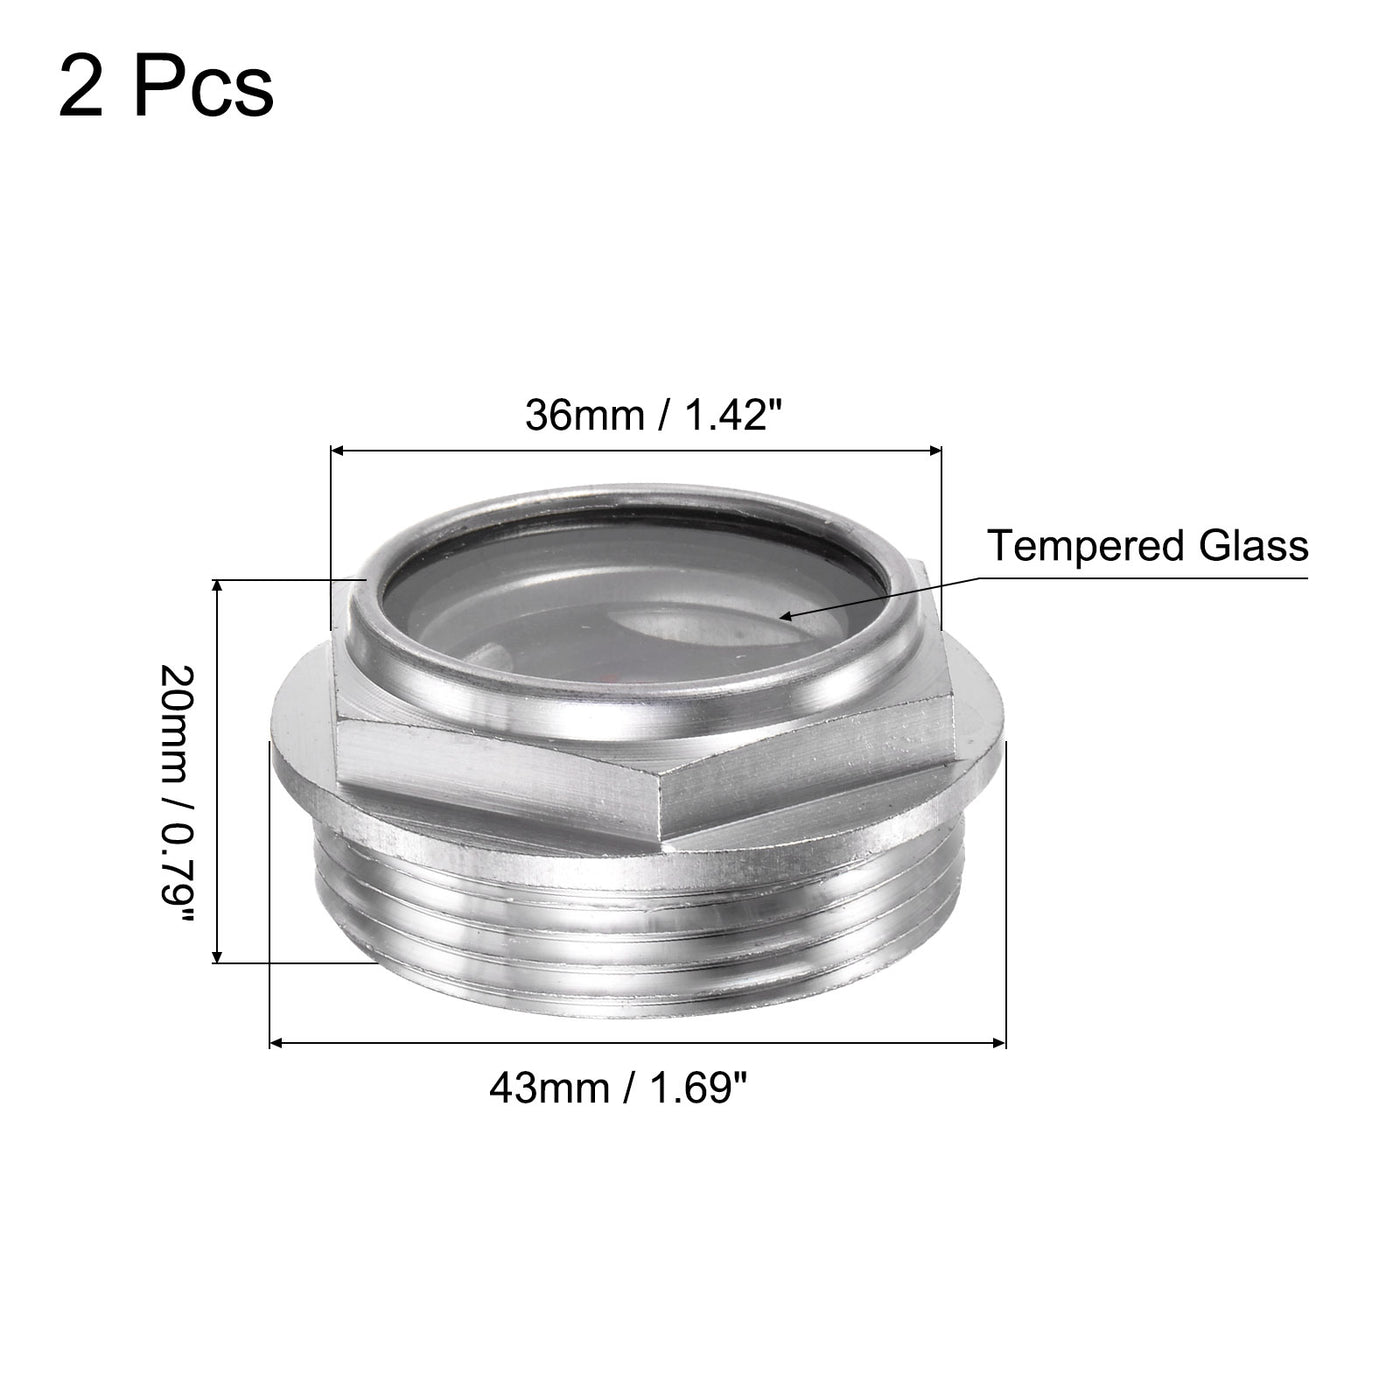 Uxcell Uxcell Air Compressor Oil Level Gauge Sight Glass M33x2mm Male Thread Aluminum 2Pcs